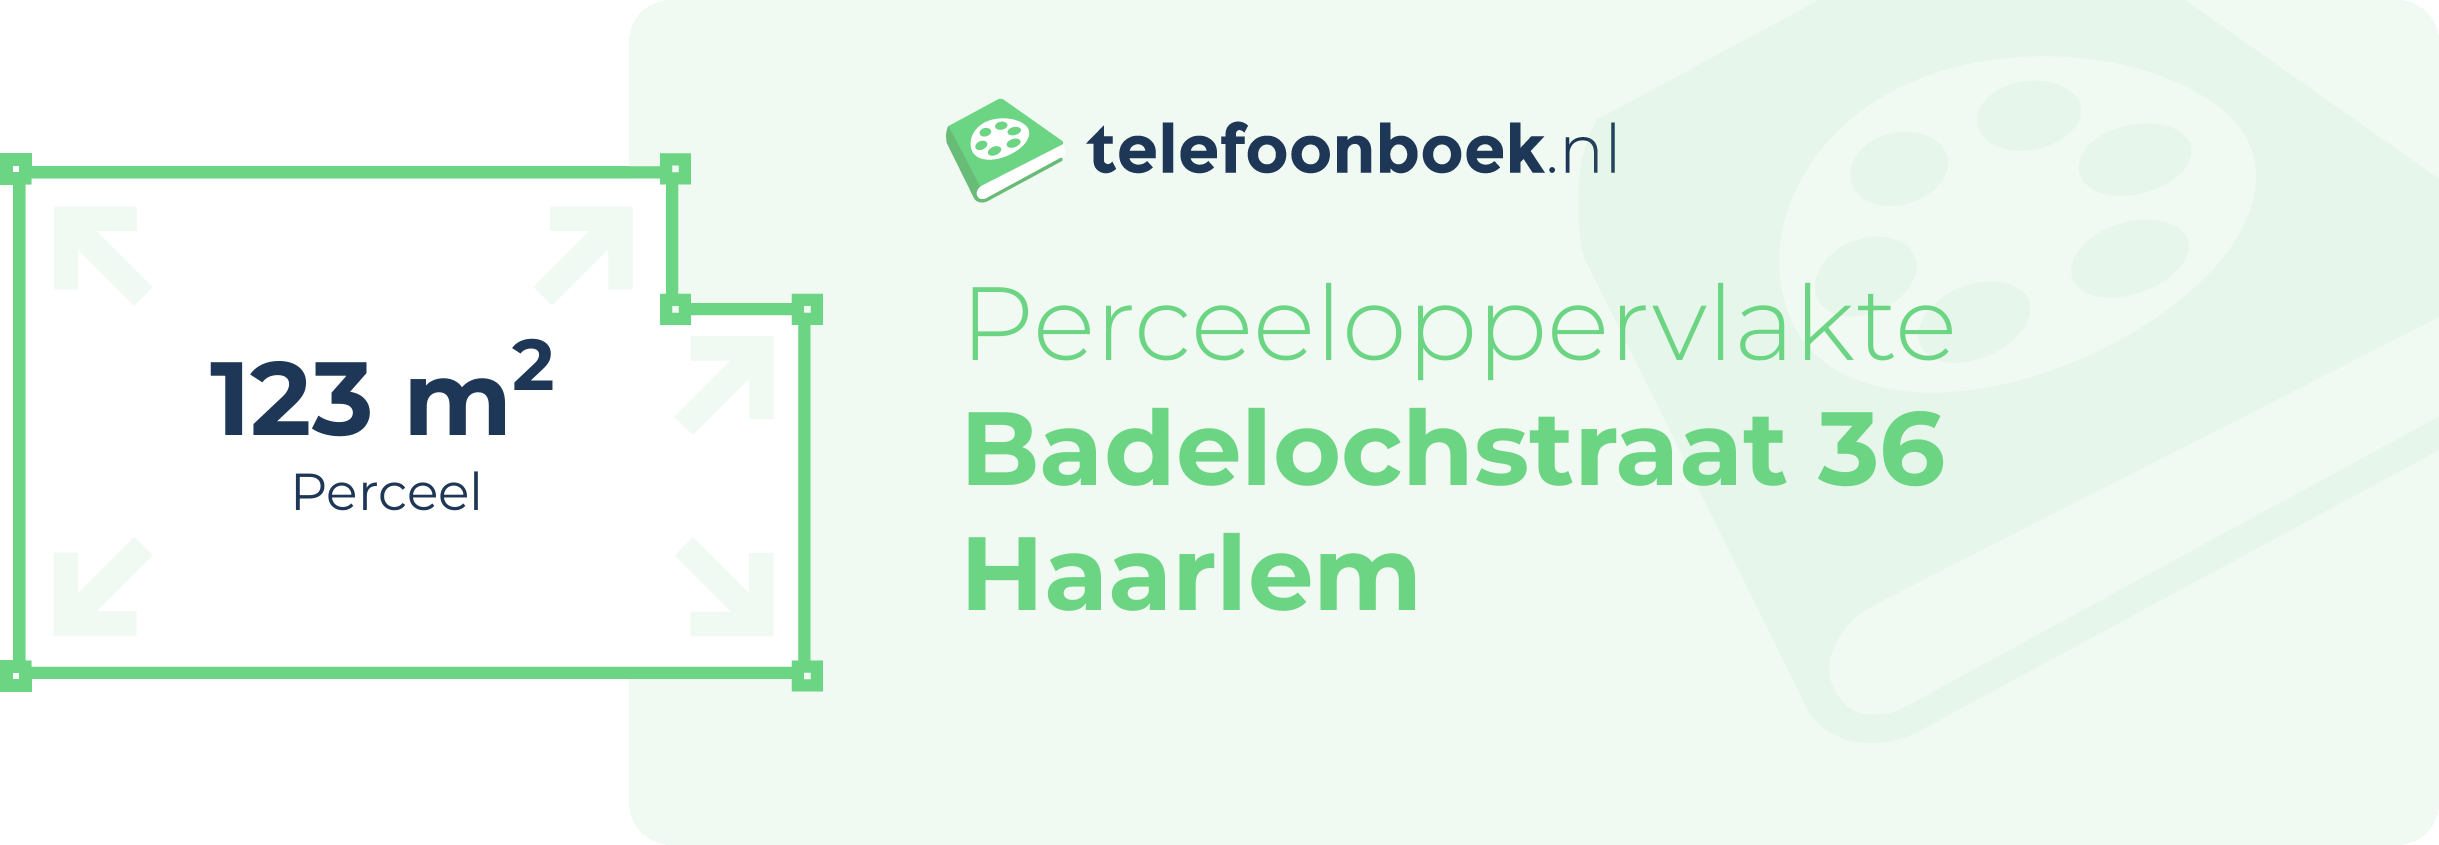 Perceeloppervlakte Badelochstraat 36 Haarlem